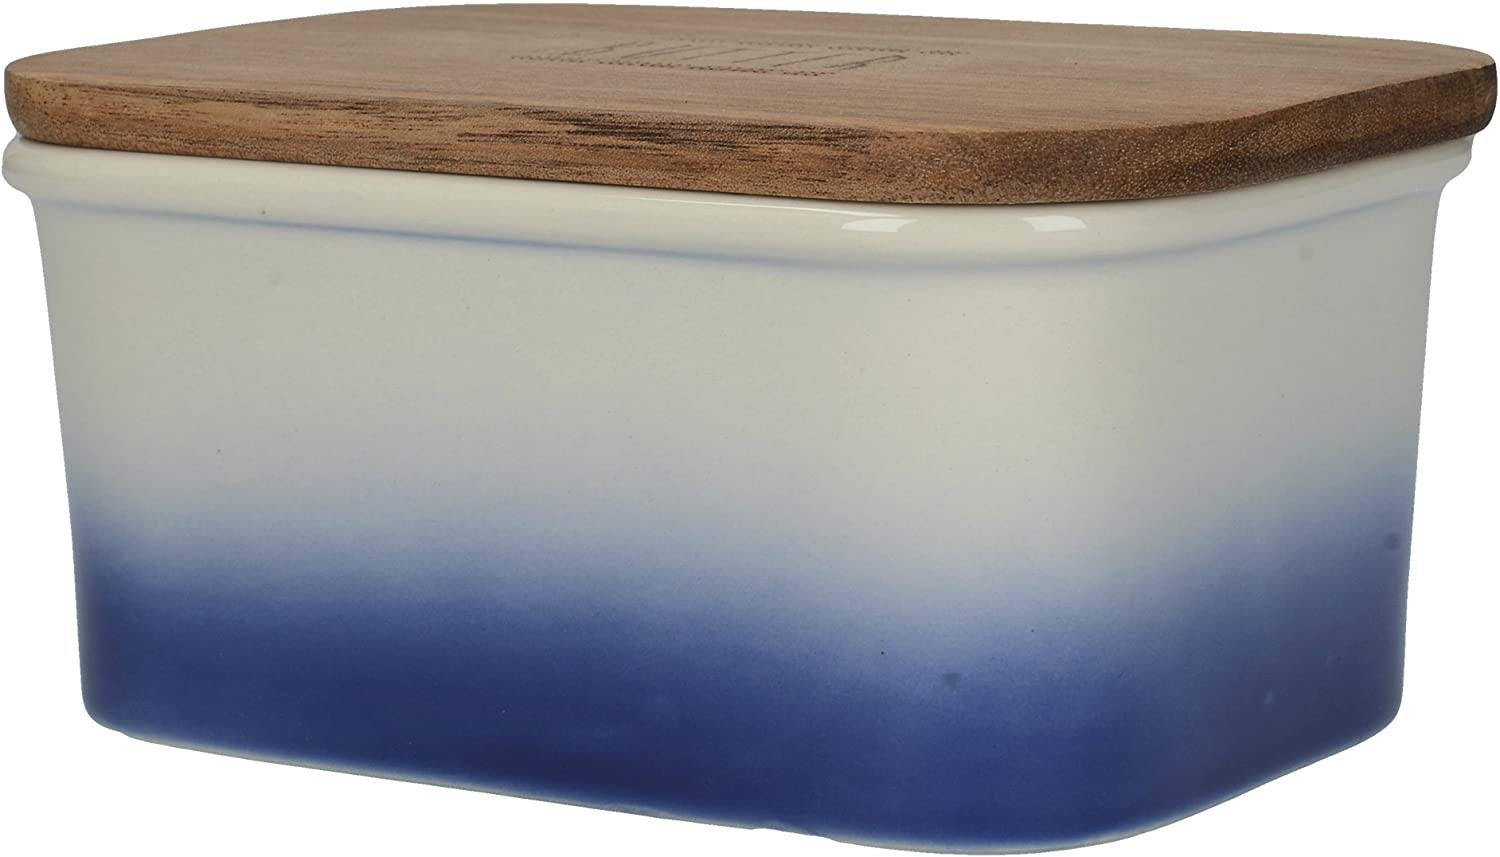 Creative Tops Drift Butter Dish, Blue Ombre, 15x11x7cm, Labelled #acc